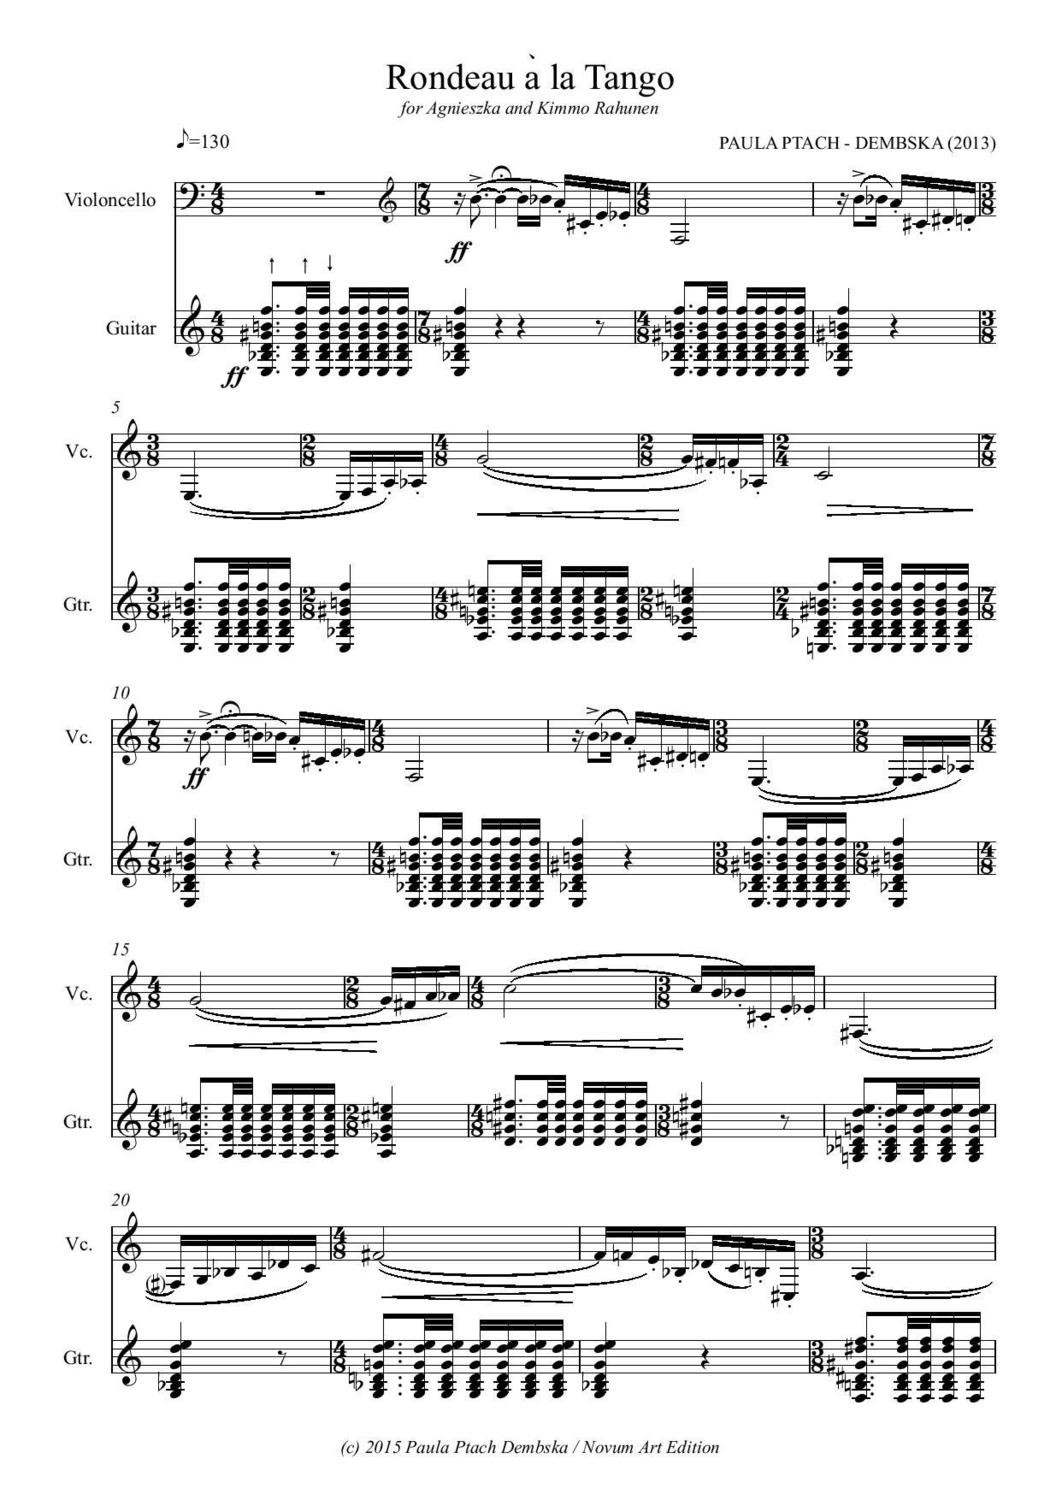 Paula Ptach-Dembska: Rondeau à la Tango- sheet music (PDF)